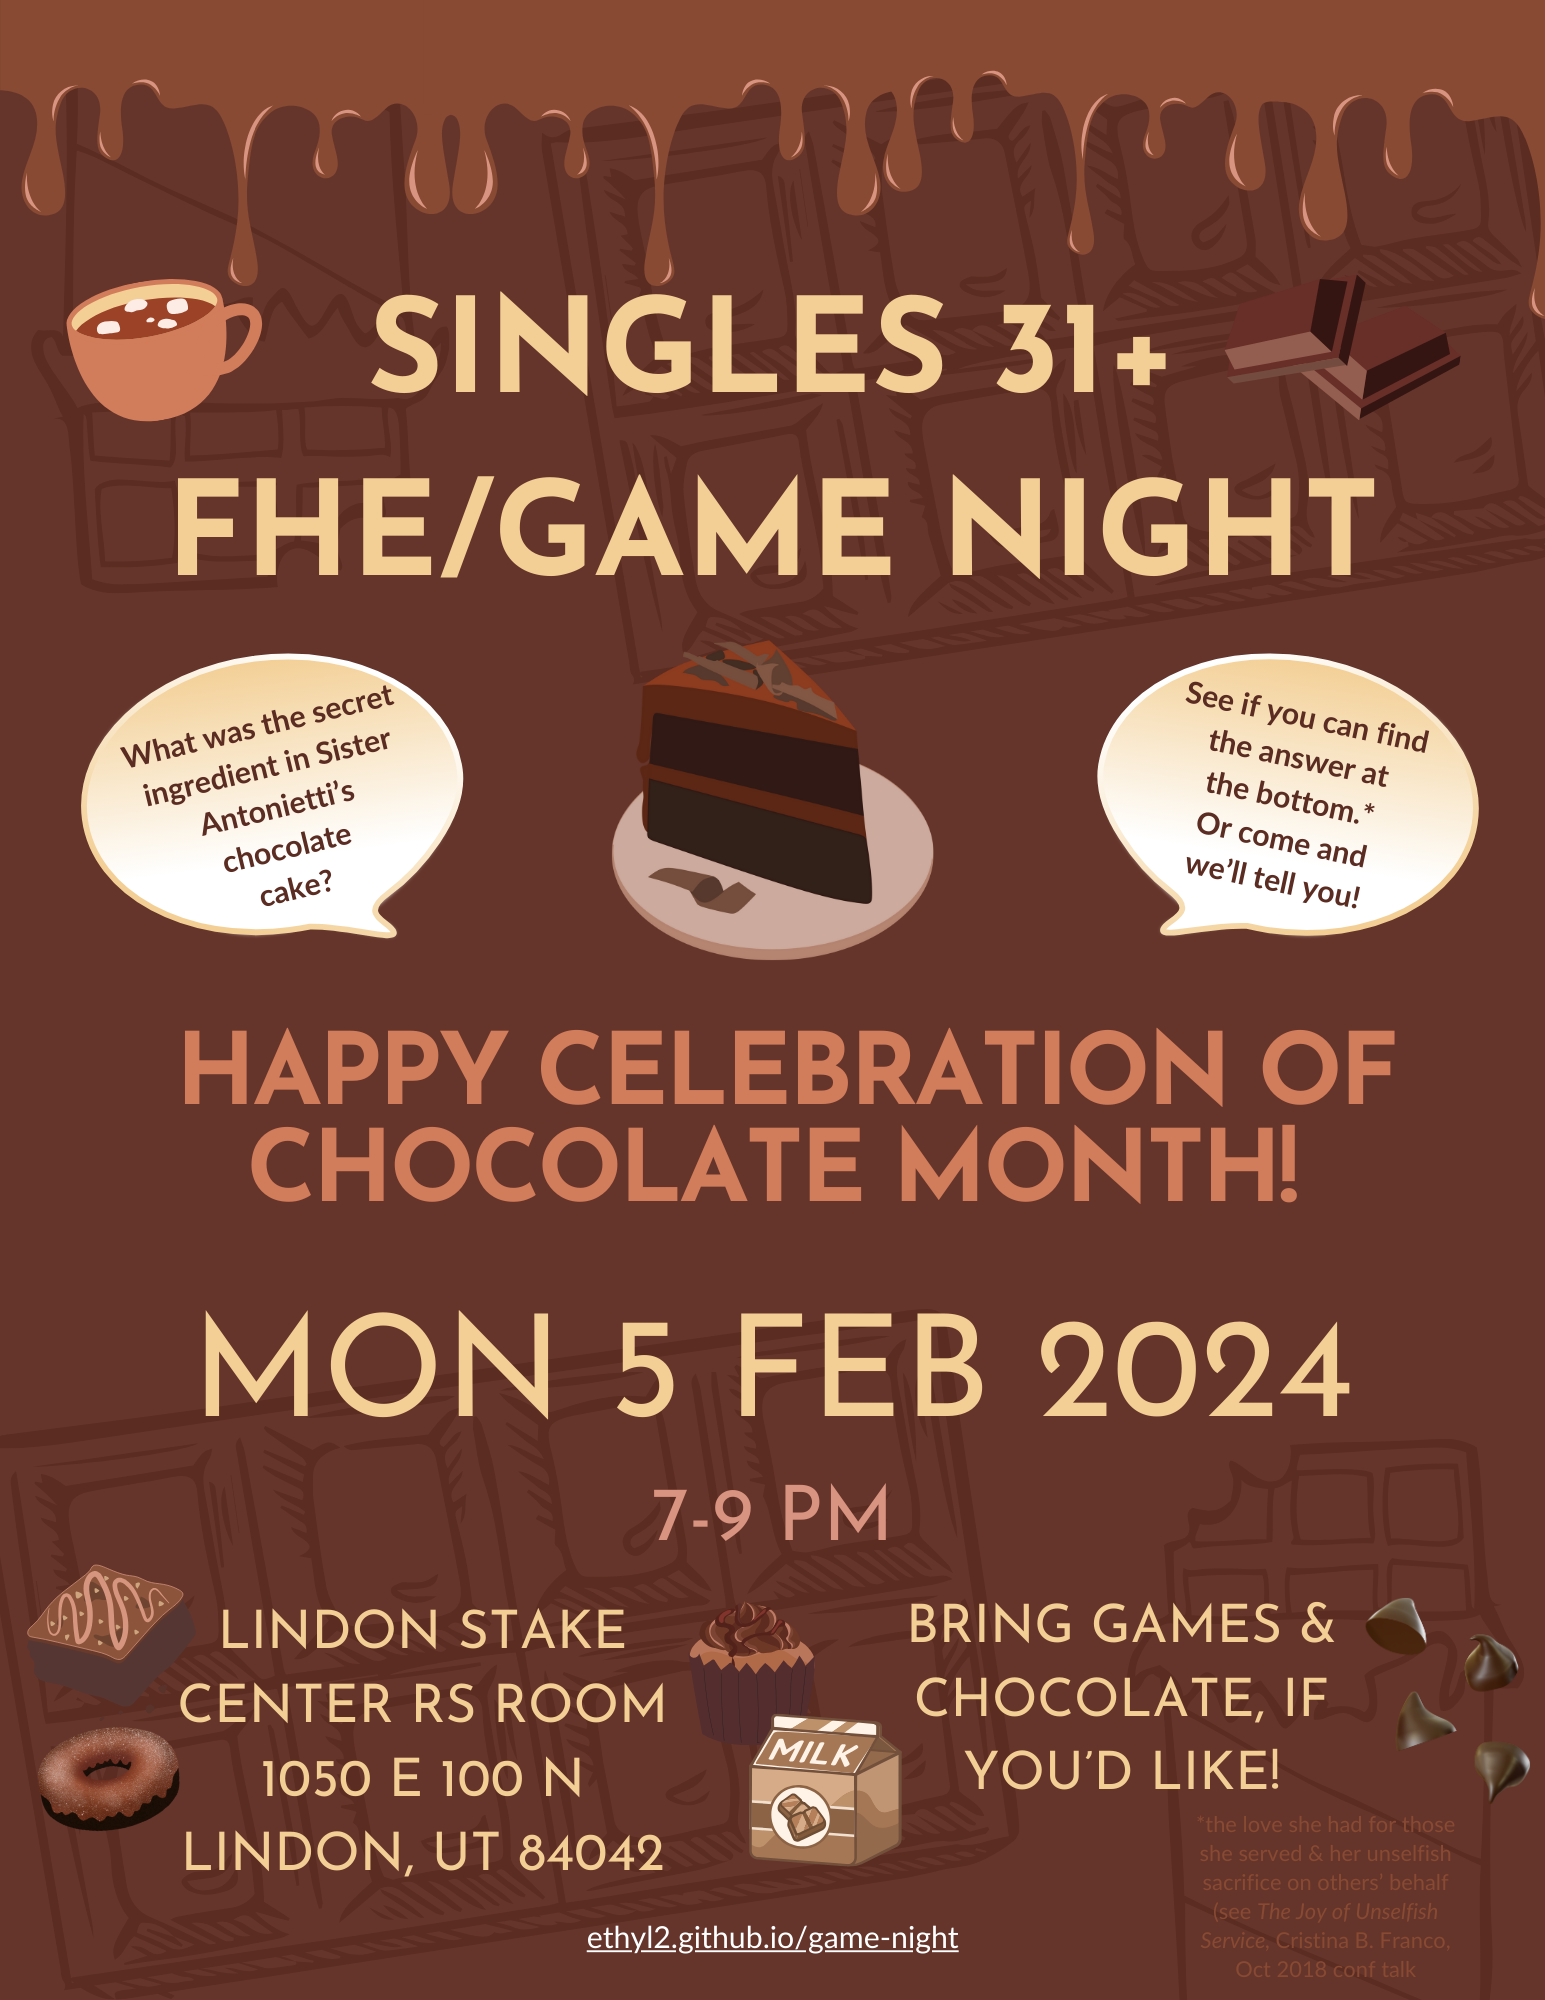 Singles 31+ Game Night/FHE Feb 2024